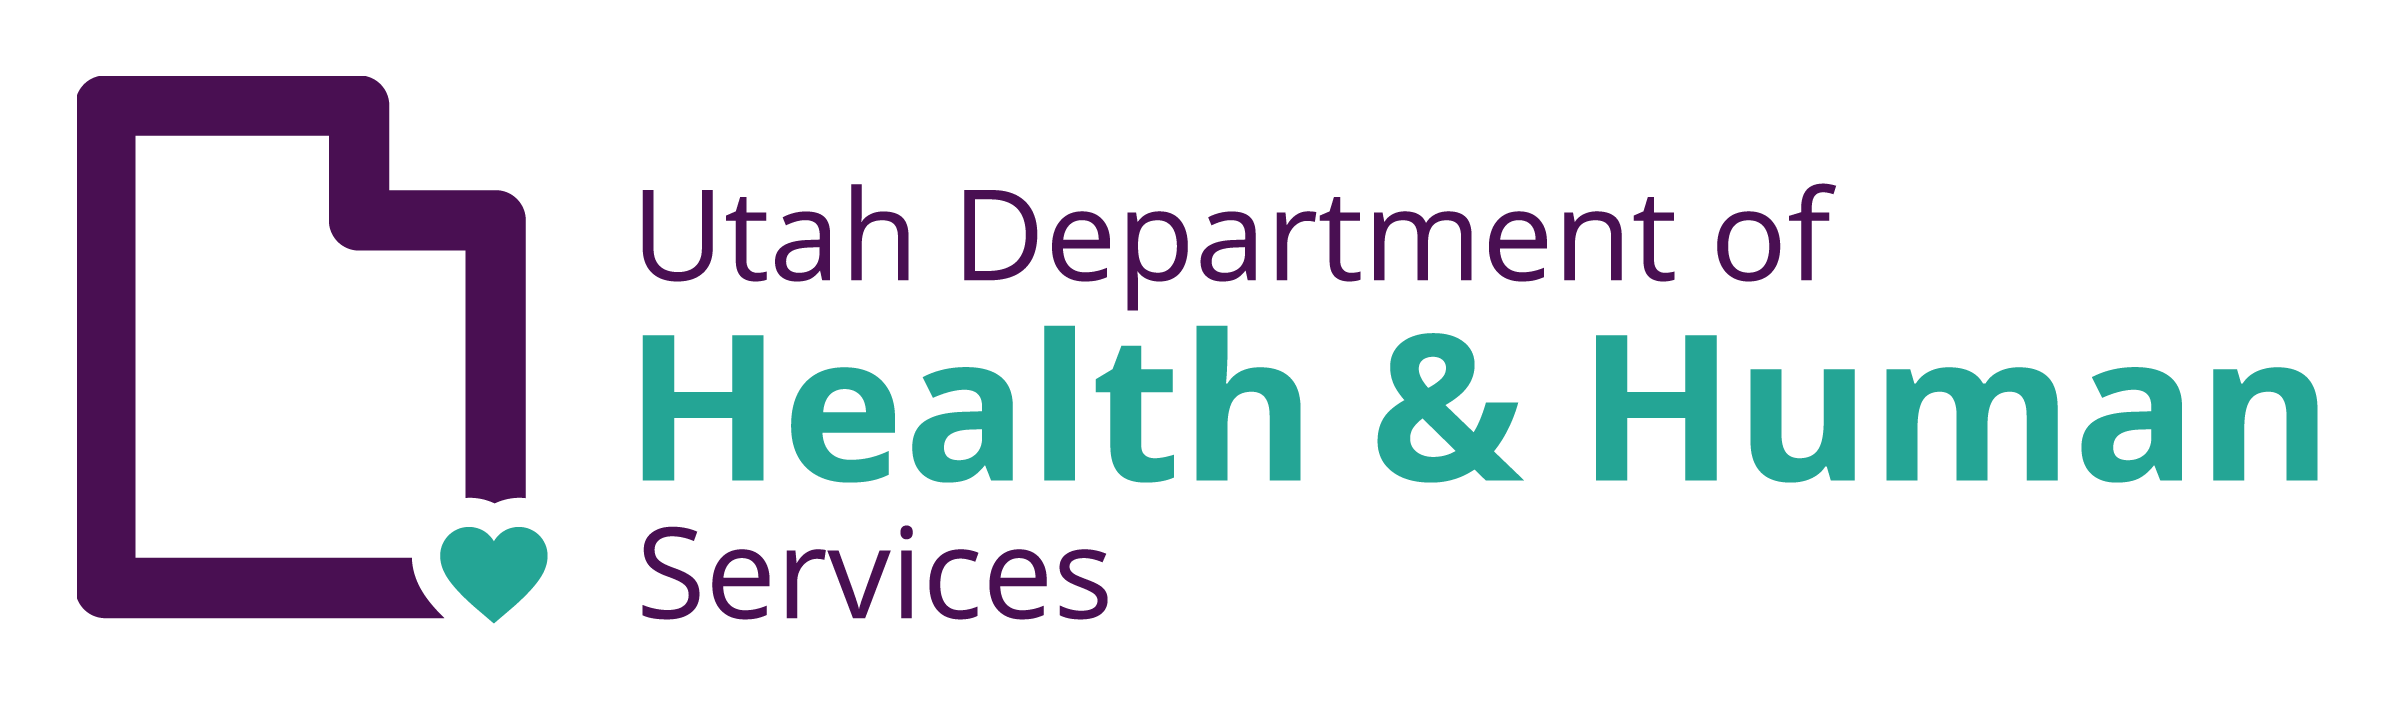 Utah Department of Health & Human Services horizontal logo